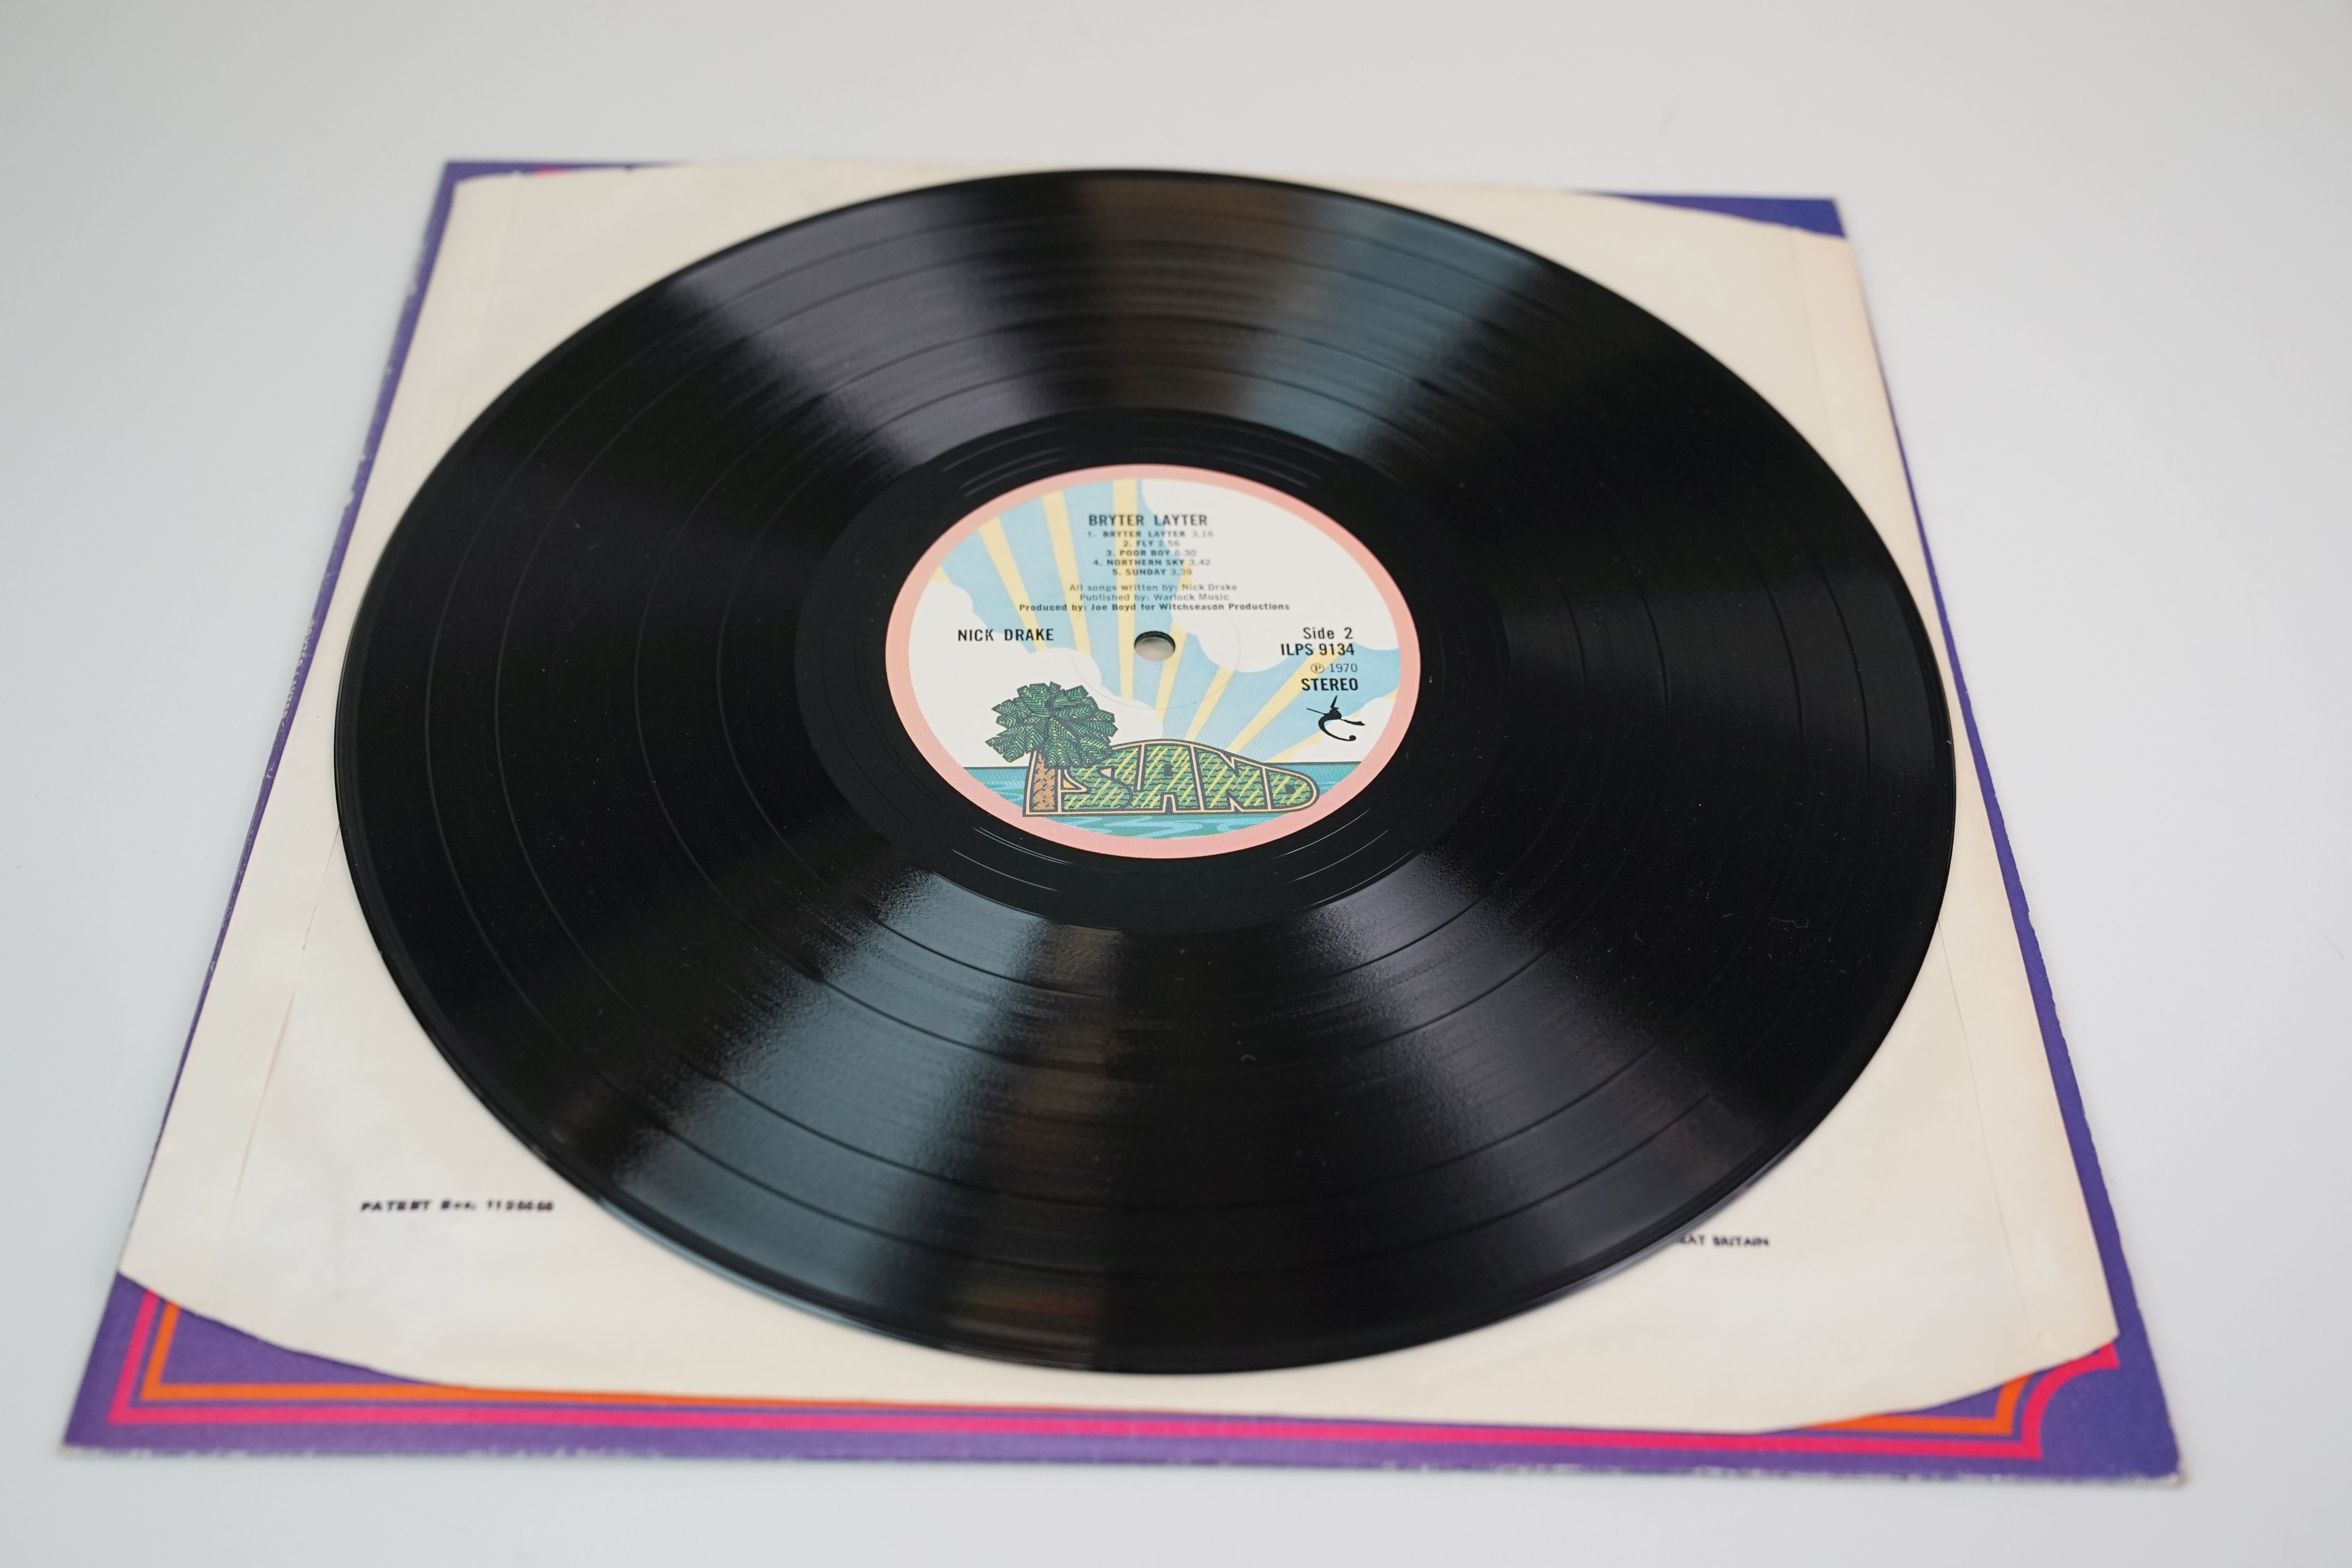 Vinyl - Nick Drake -Bryter Layter LP on Island ILPS9134, sleeve and vinyl vg++ - Image 4 of 6